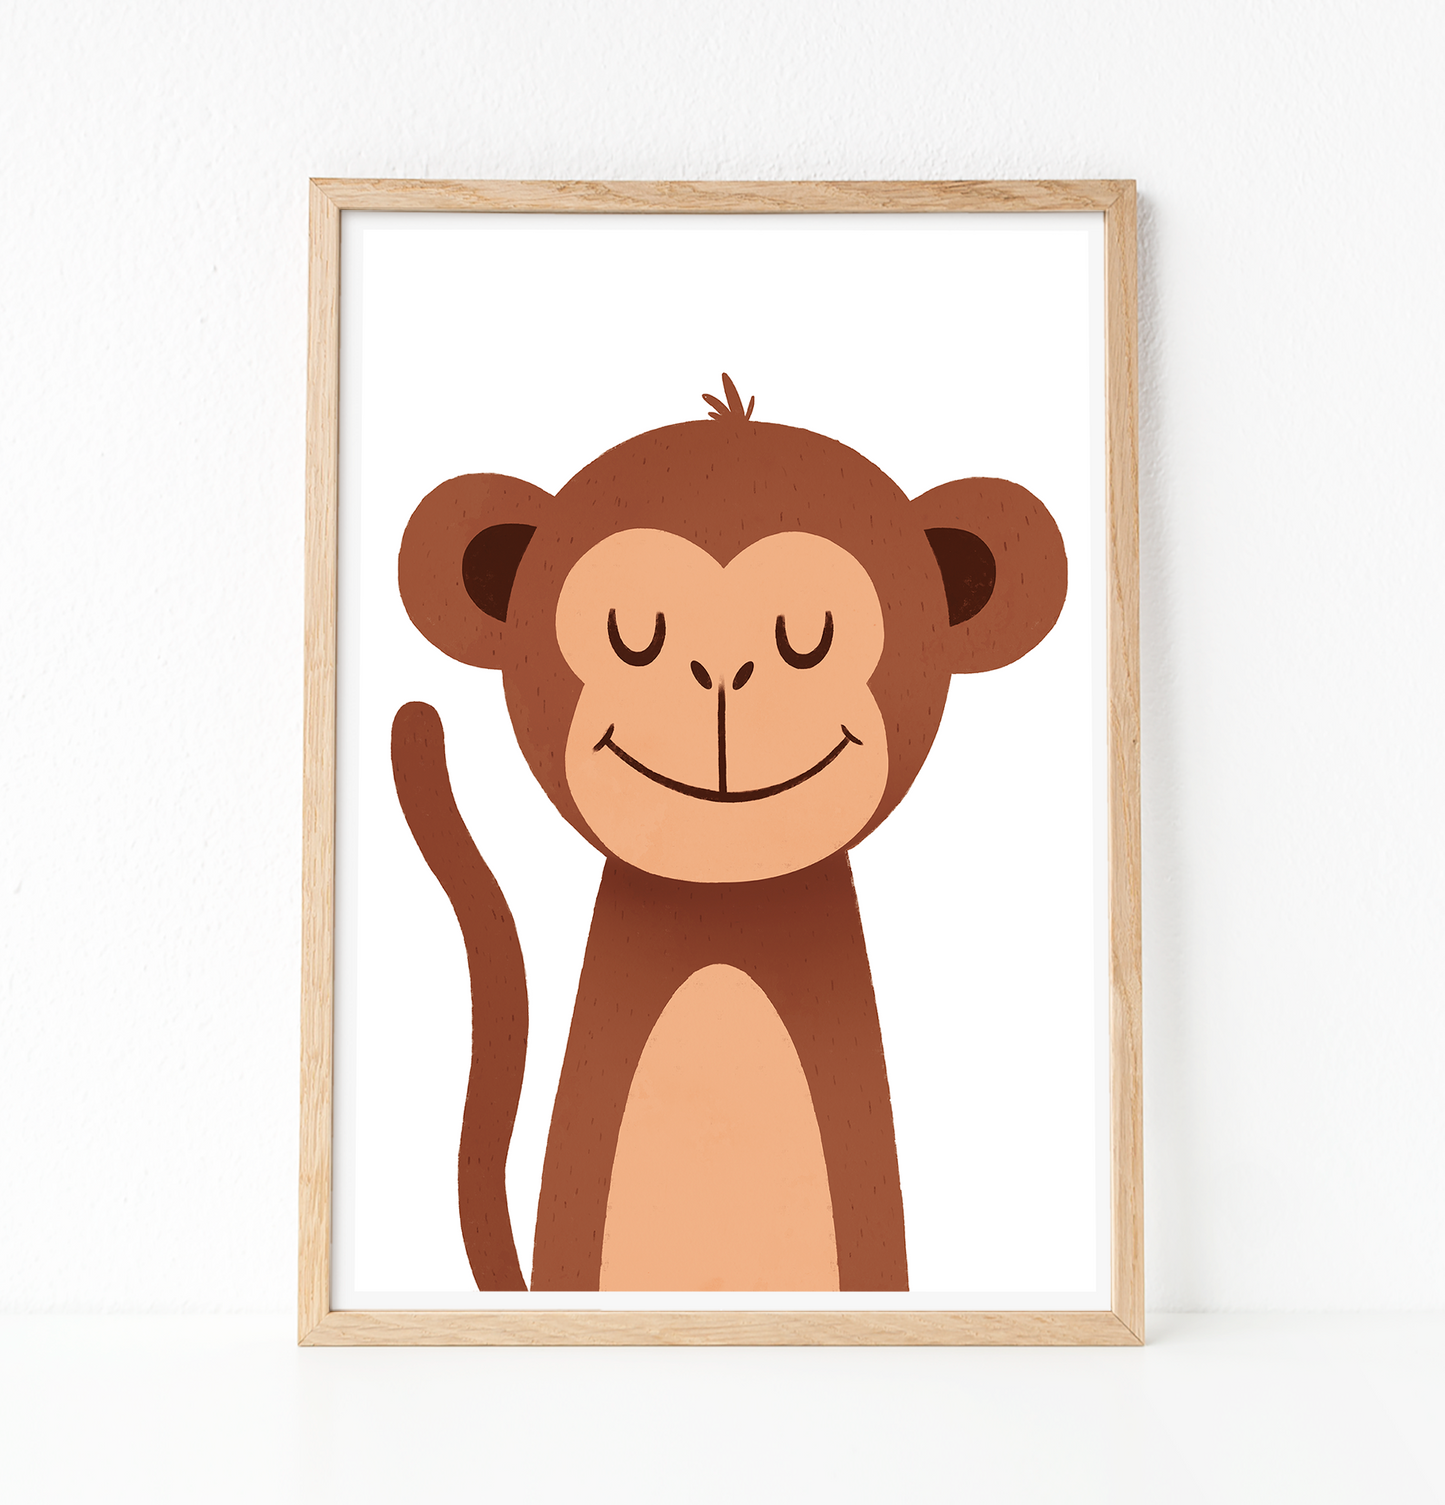 Happy monkey print